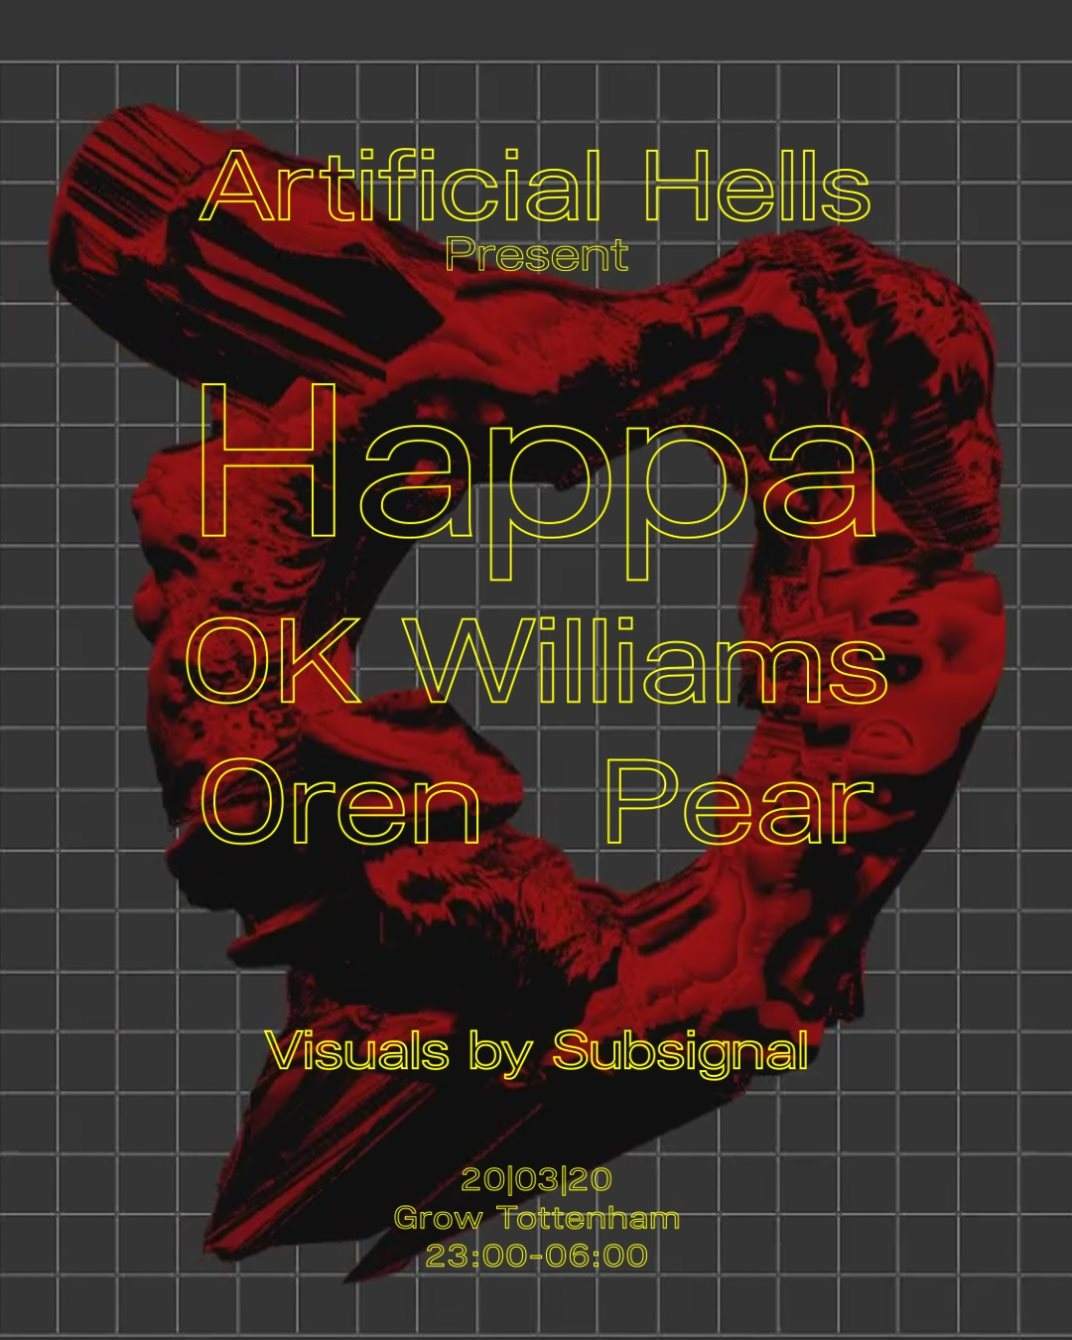 [POSTPONED] Artificial Hells presents: Happa, OK Williams, Oren & Pear. - Página frontal